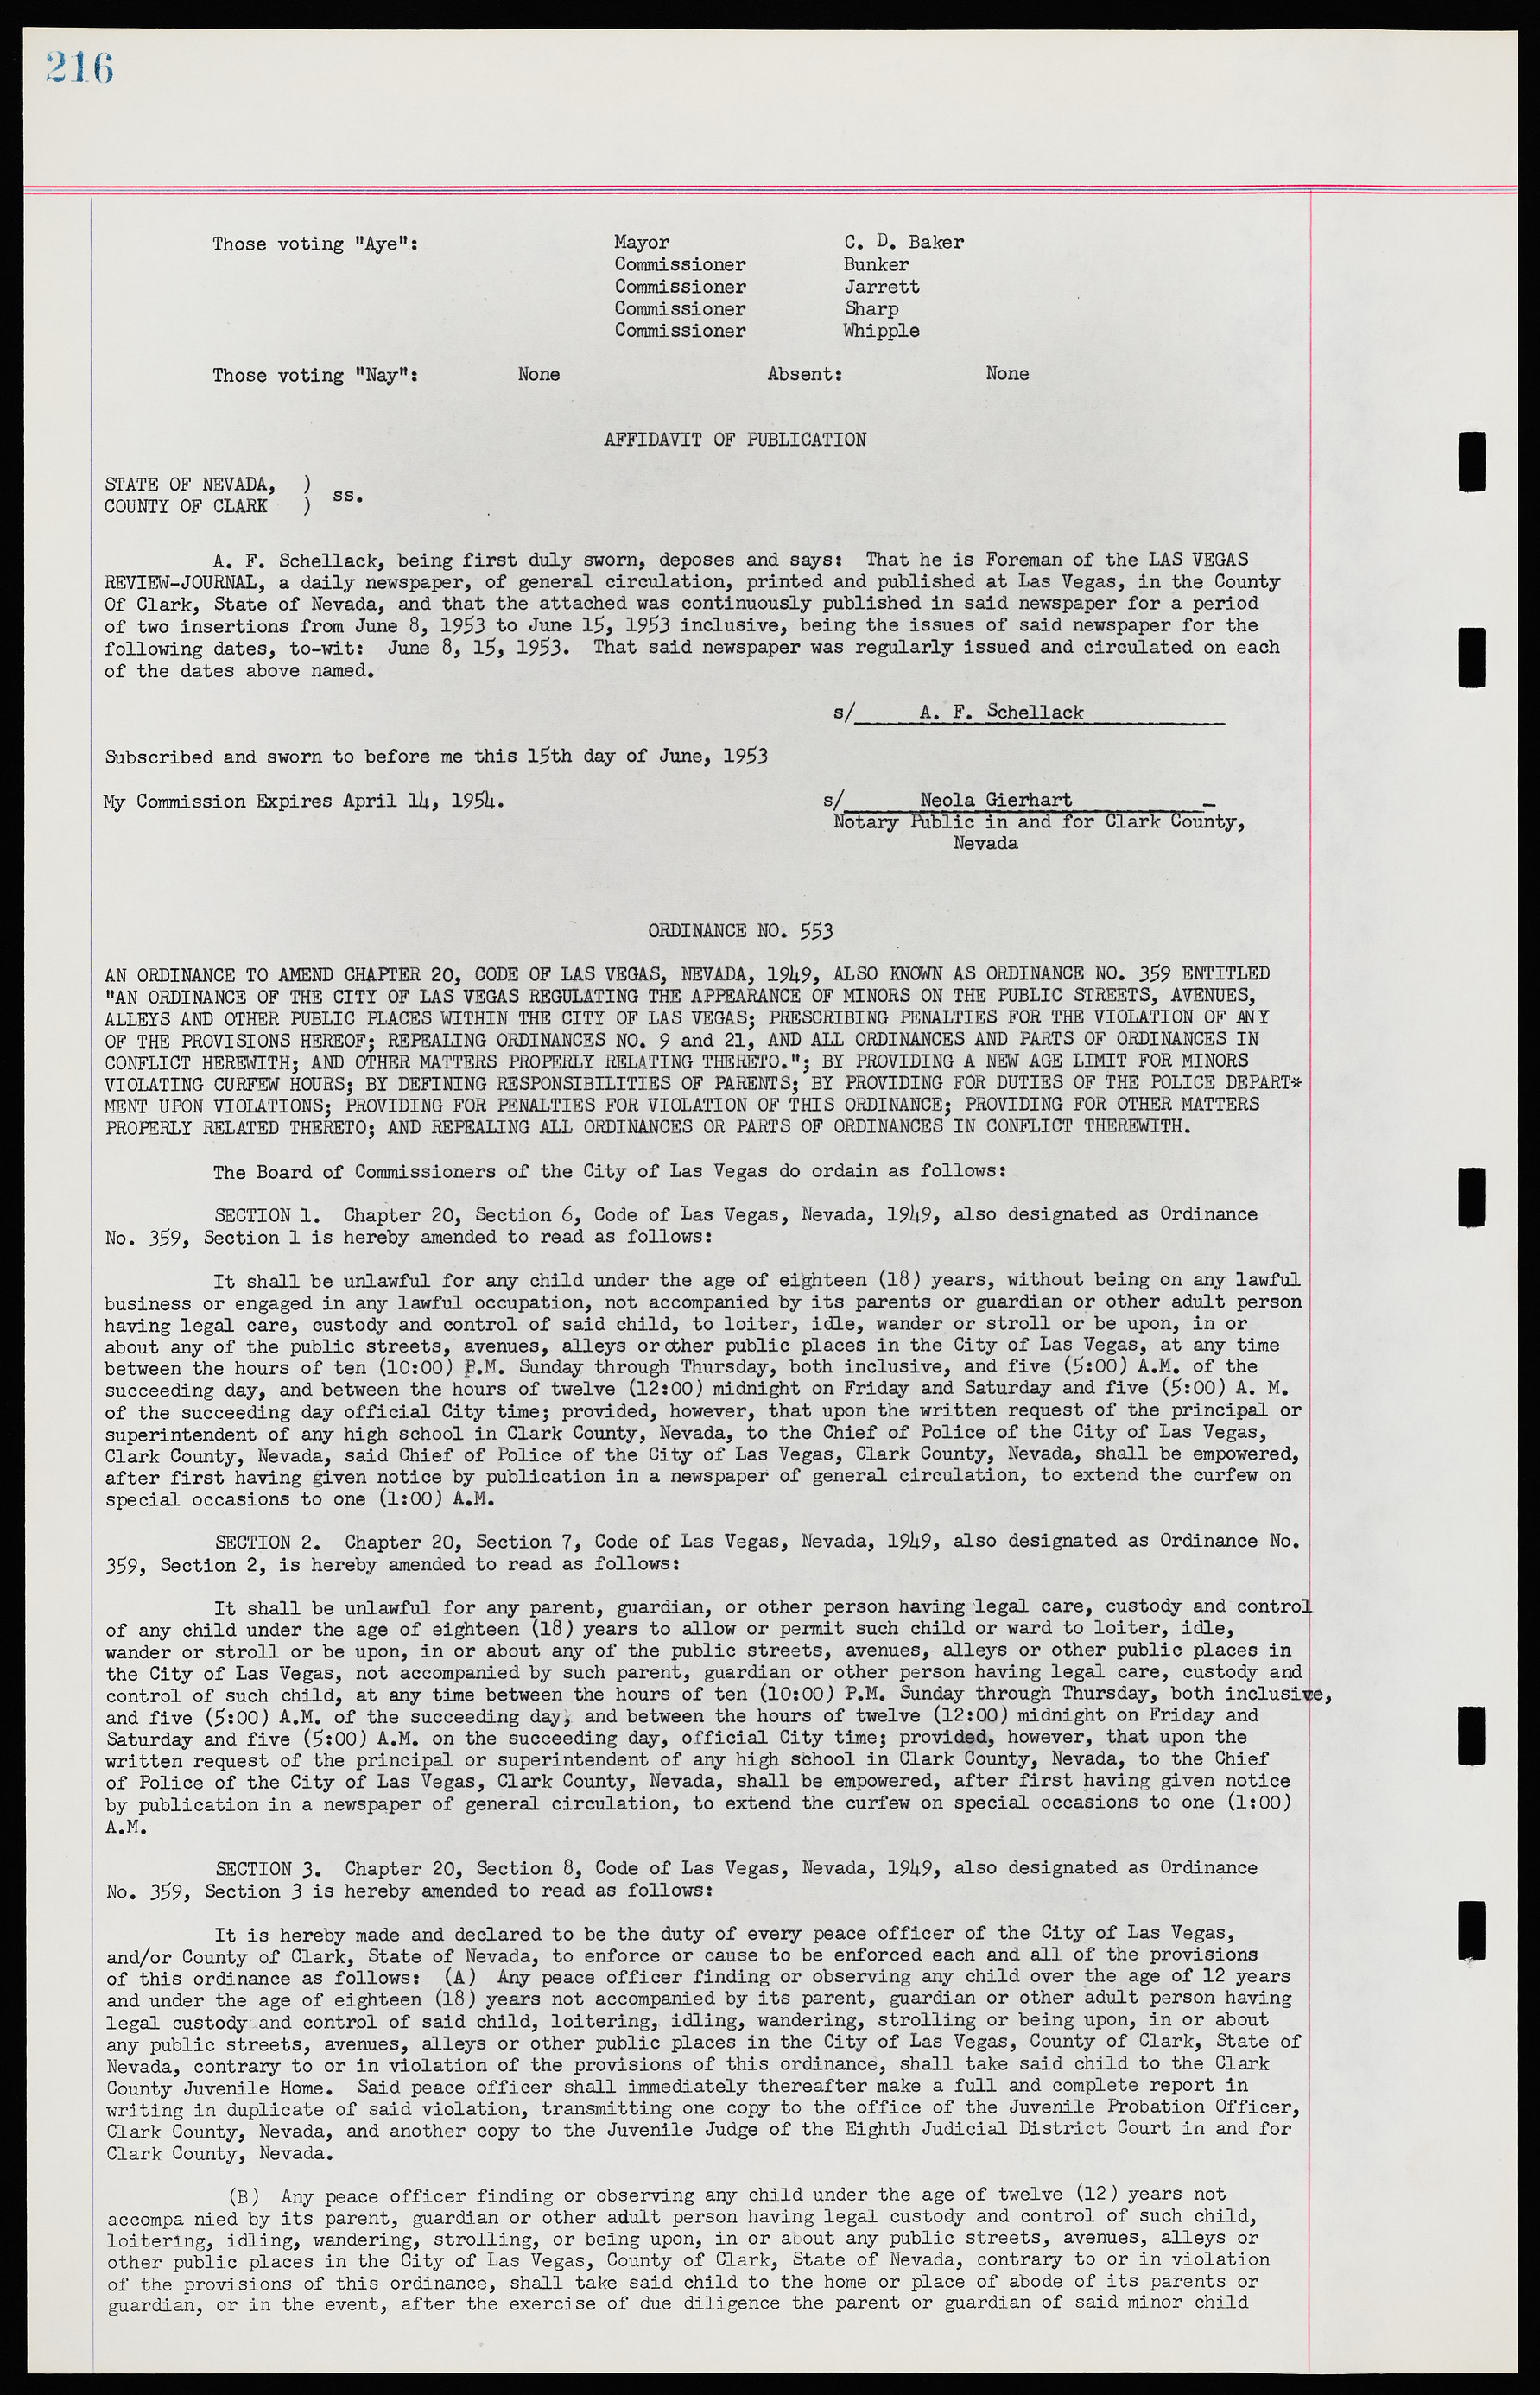 Las Vegas City Ordinances, November 13, 1950 to August 6, 1958, lvc000015-224